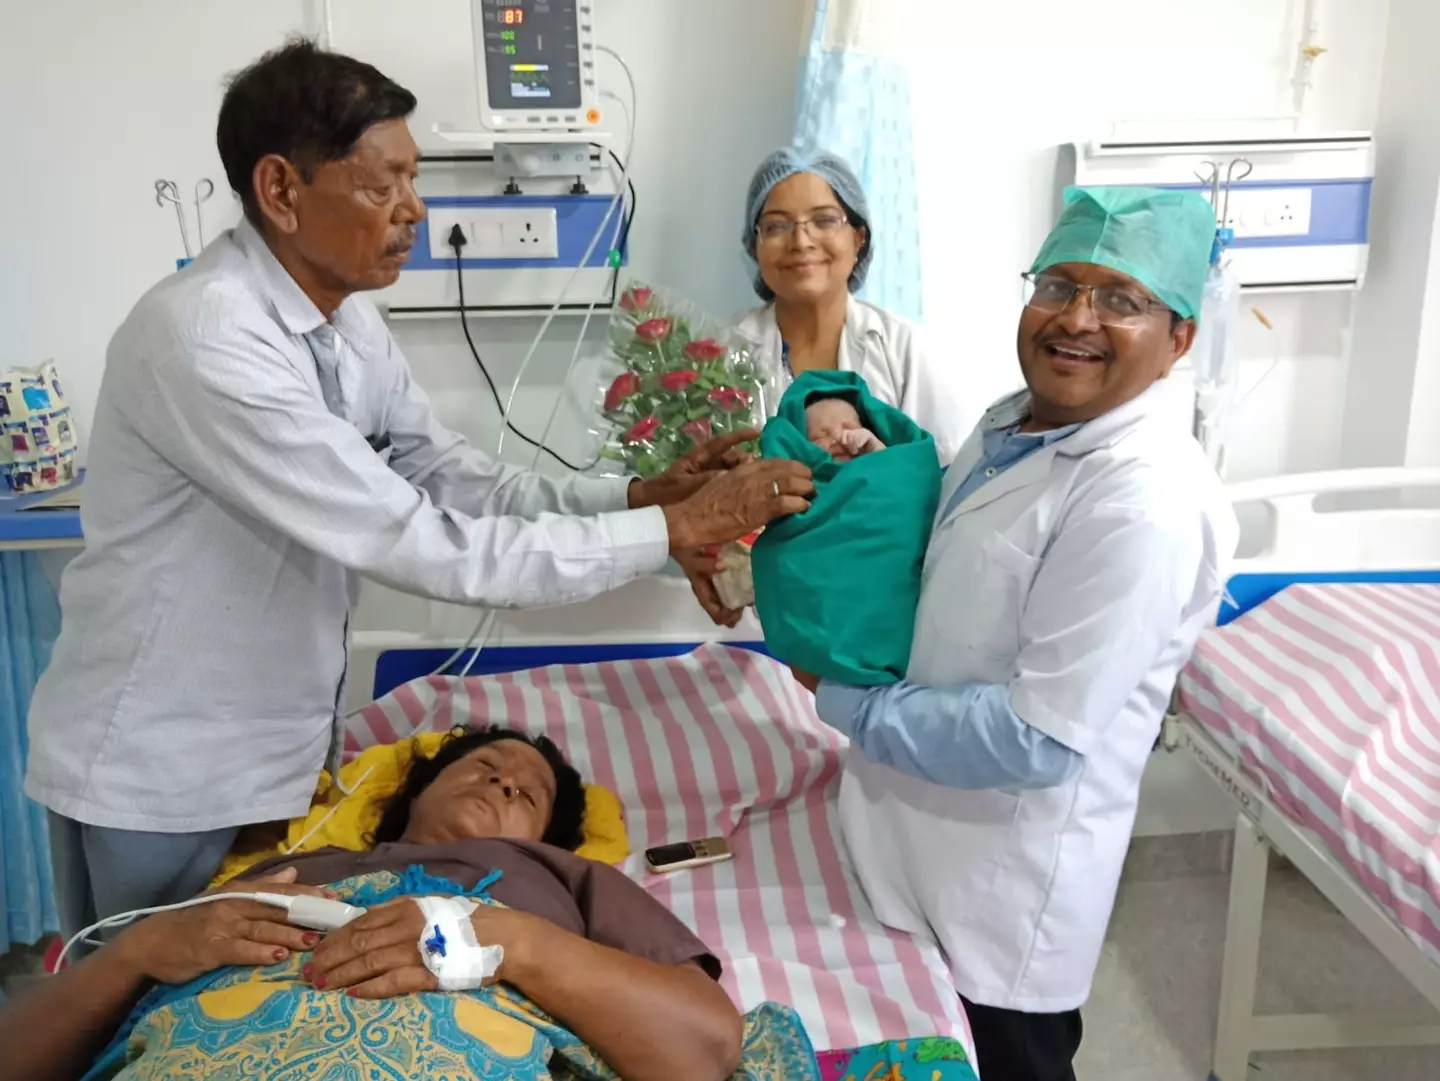 Chandravati had a successful round of IVF last year.